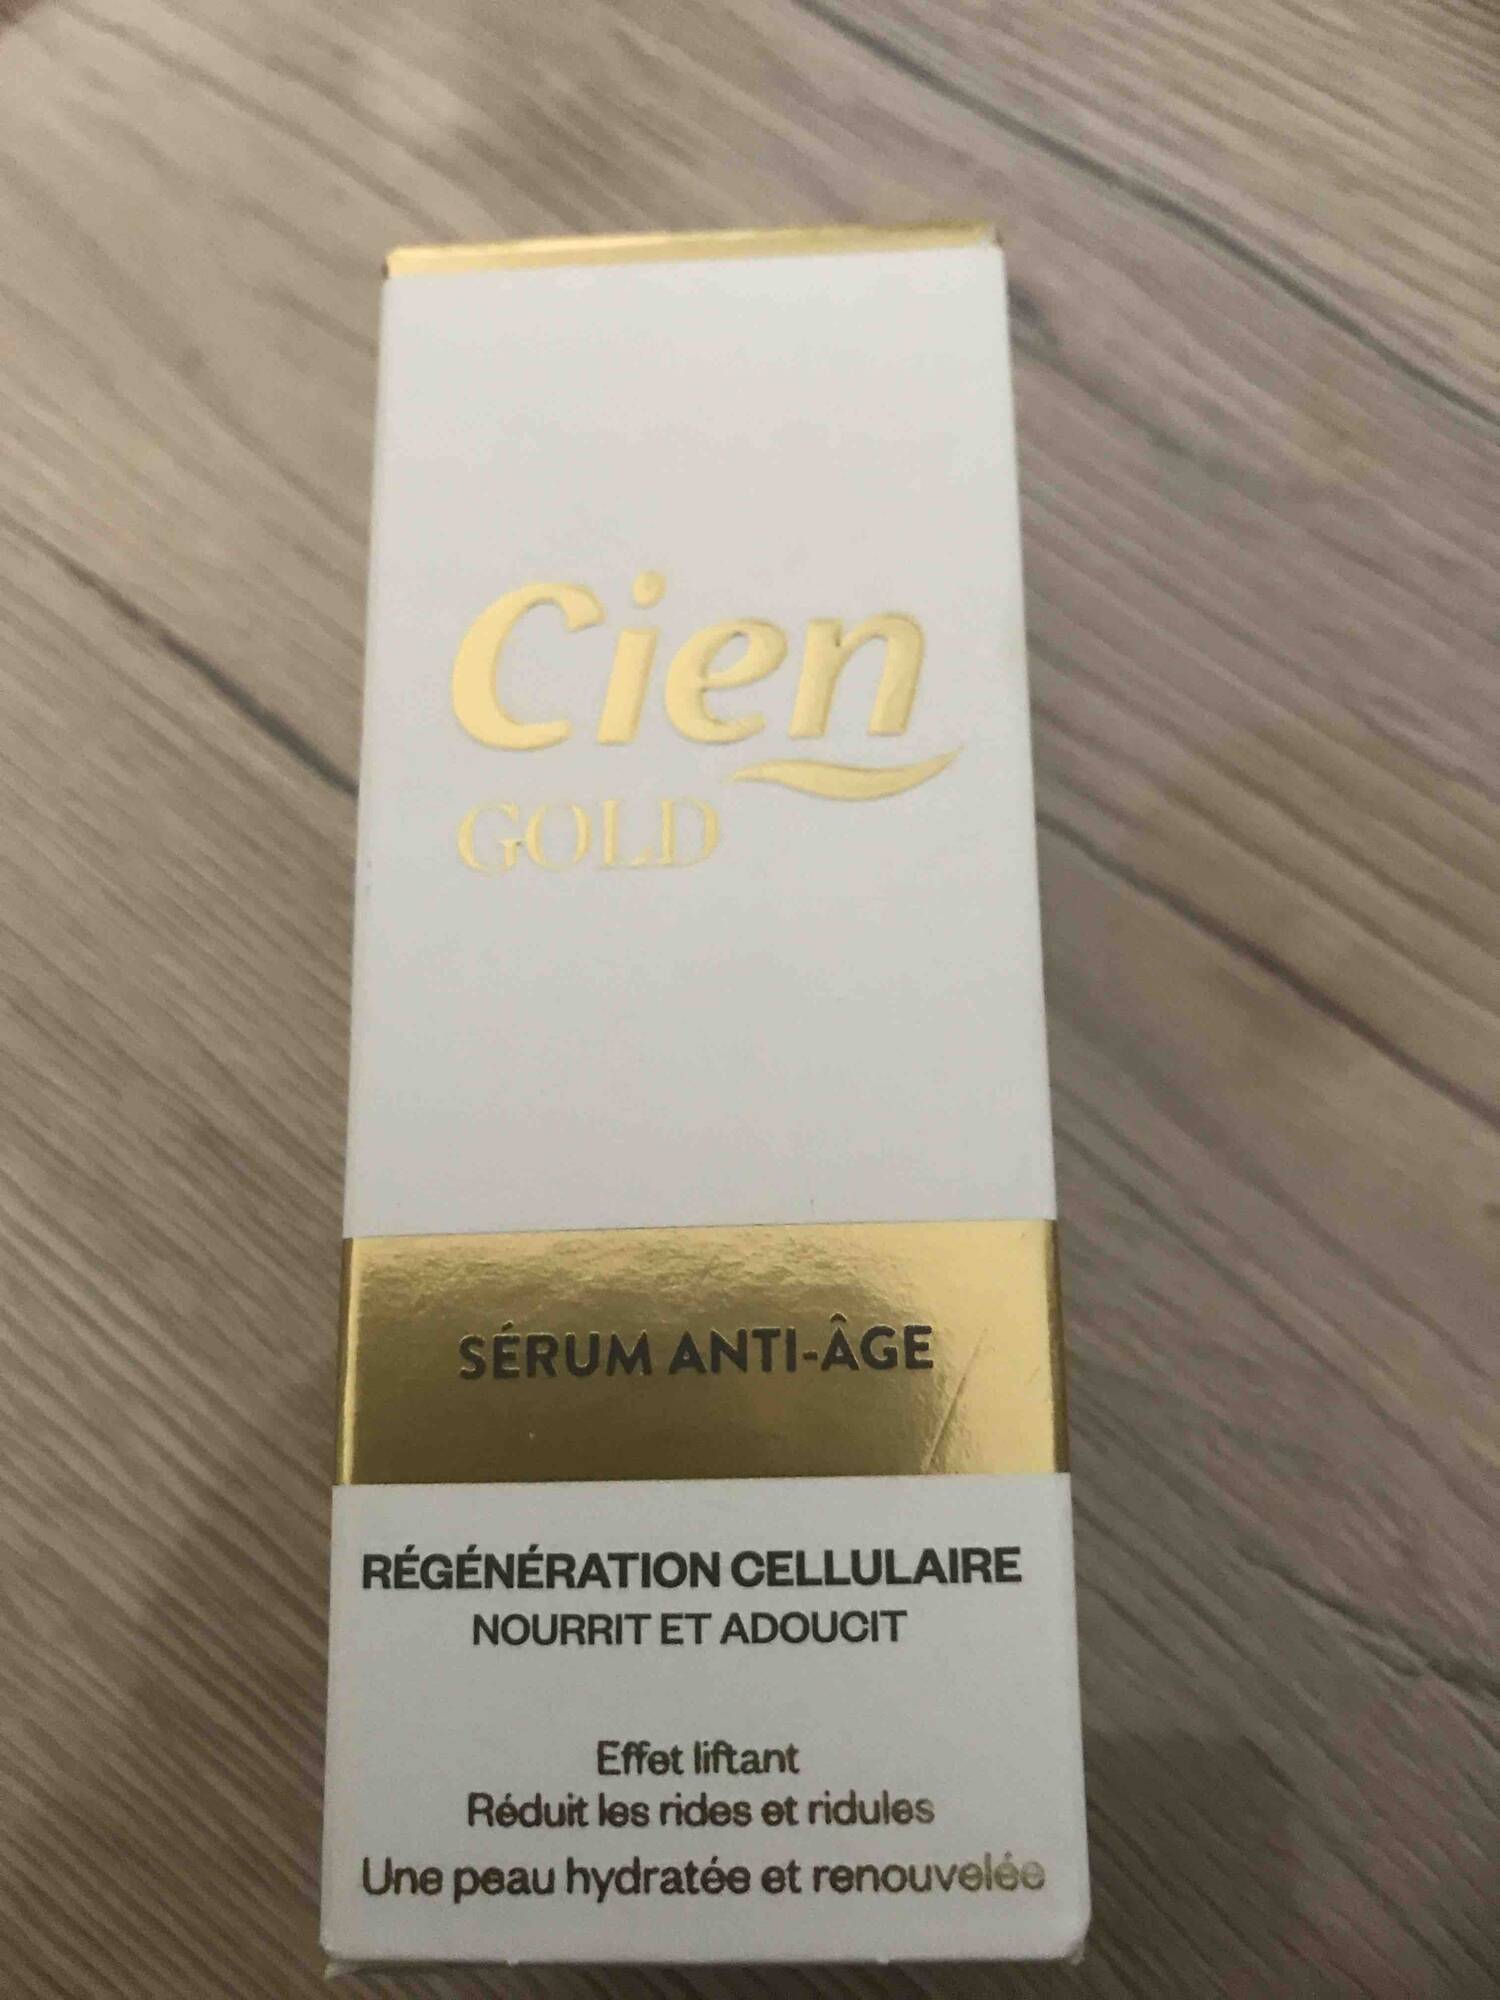 CIEN - Gold - Sérum anti-âge